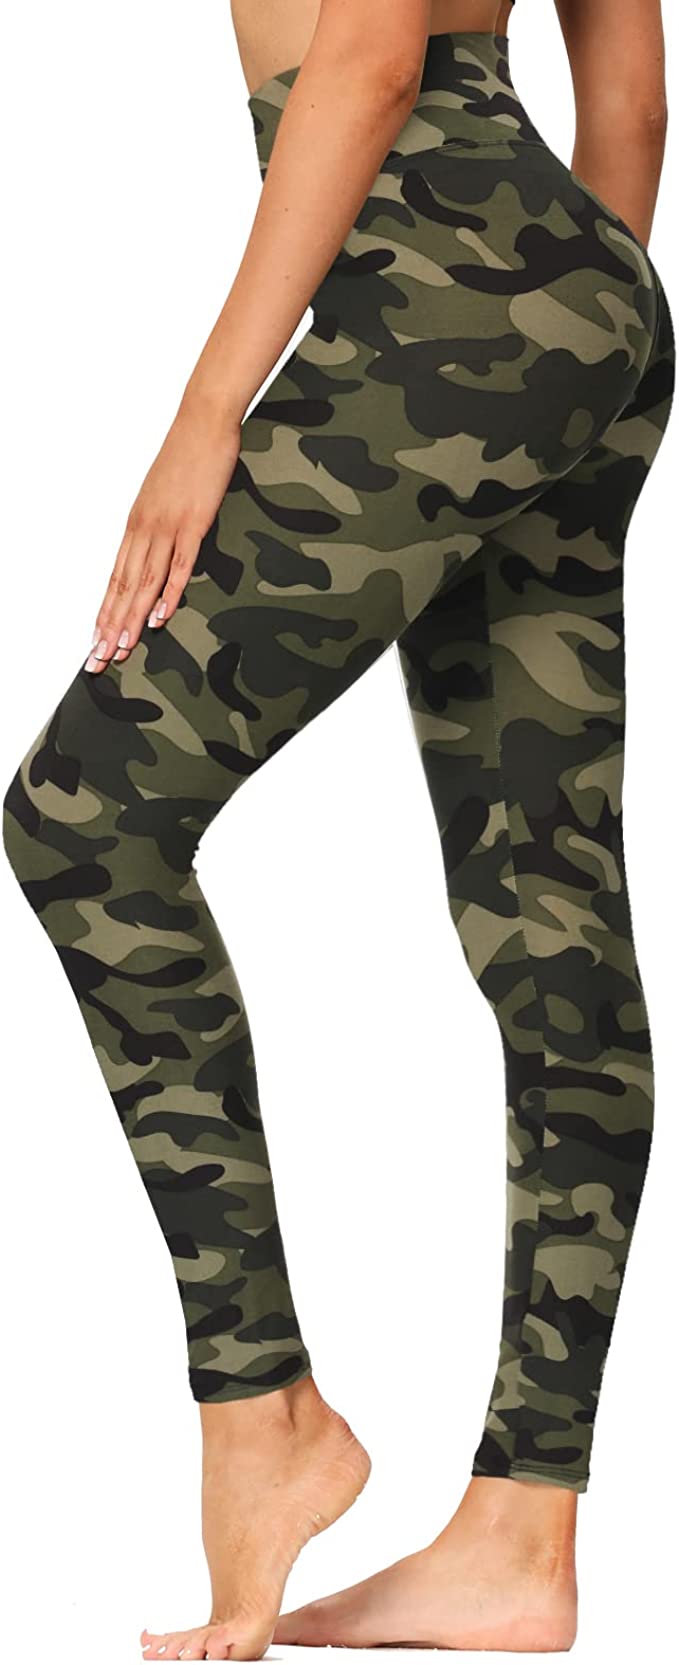 Wholesale High Waisted Green Camo Leggings Soft Slim Tummy Control Printed Pants